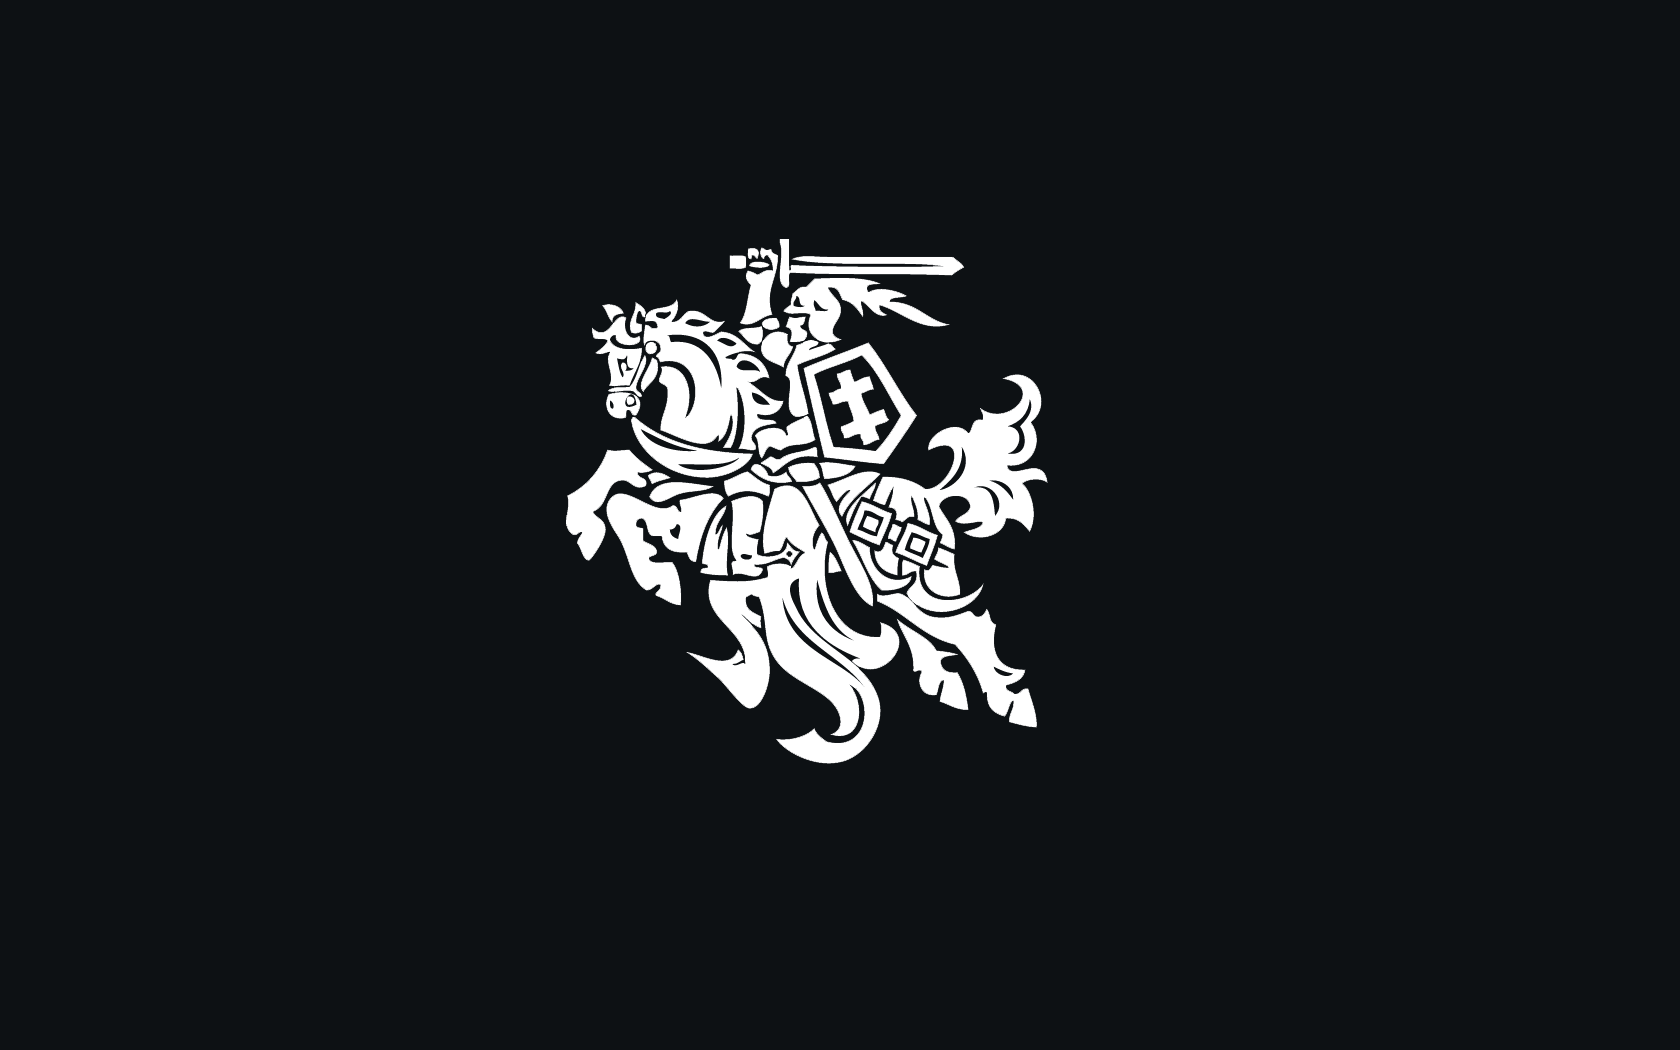 General 1680x1050 coat of arms knight gray background monochrome simple background minimalism fantasy art fantasy men sword